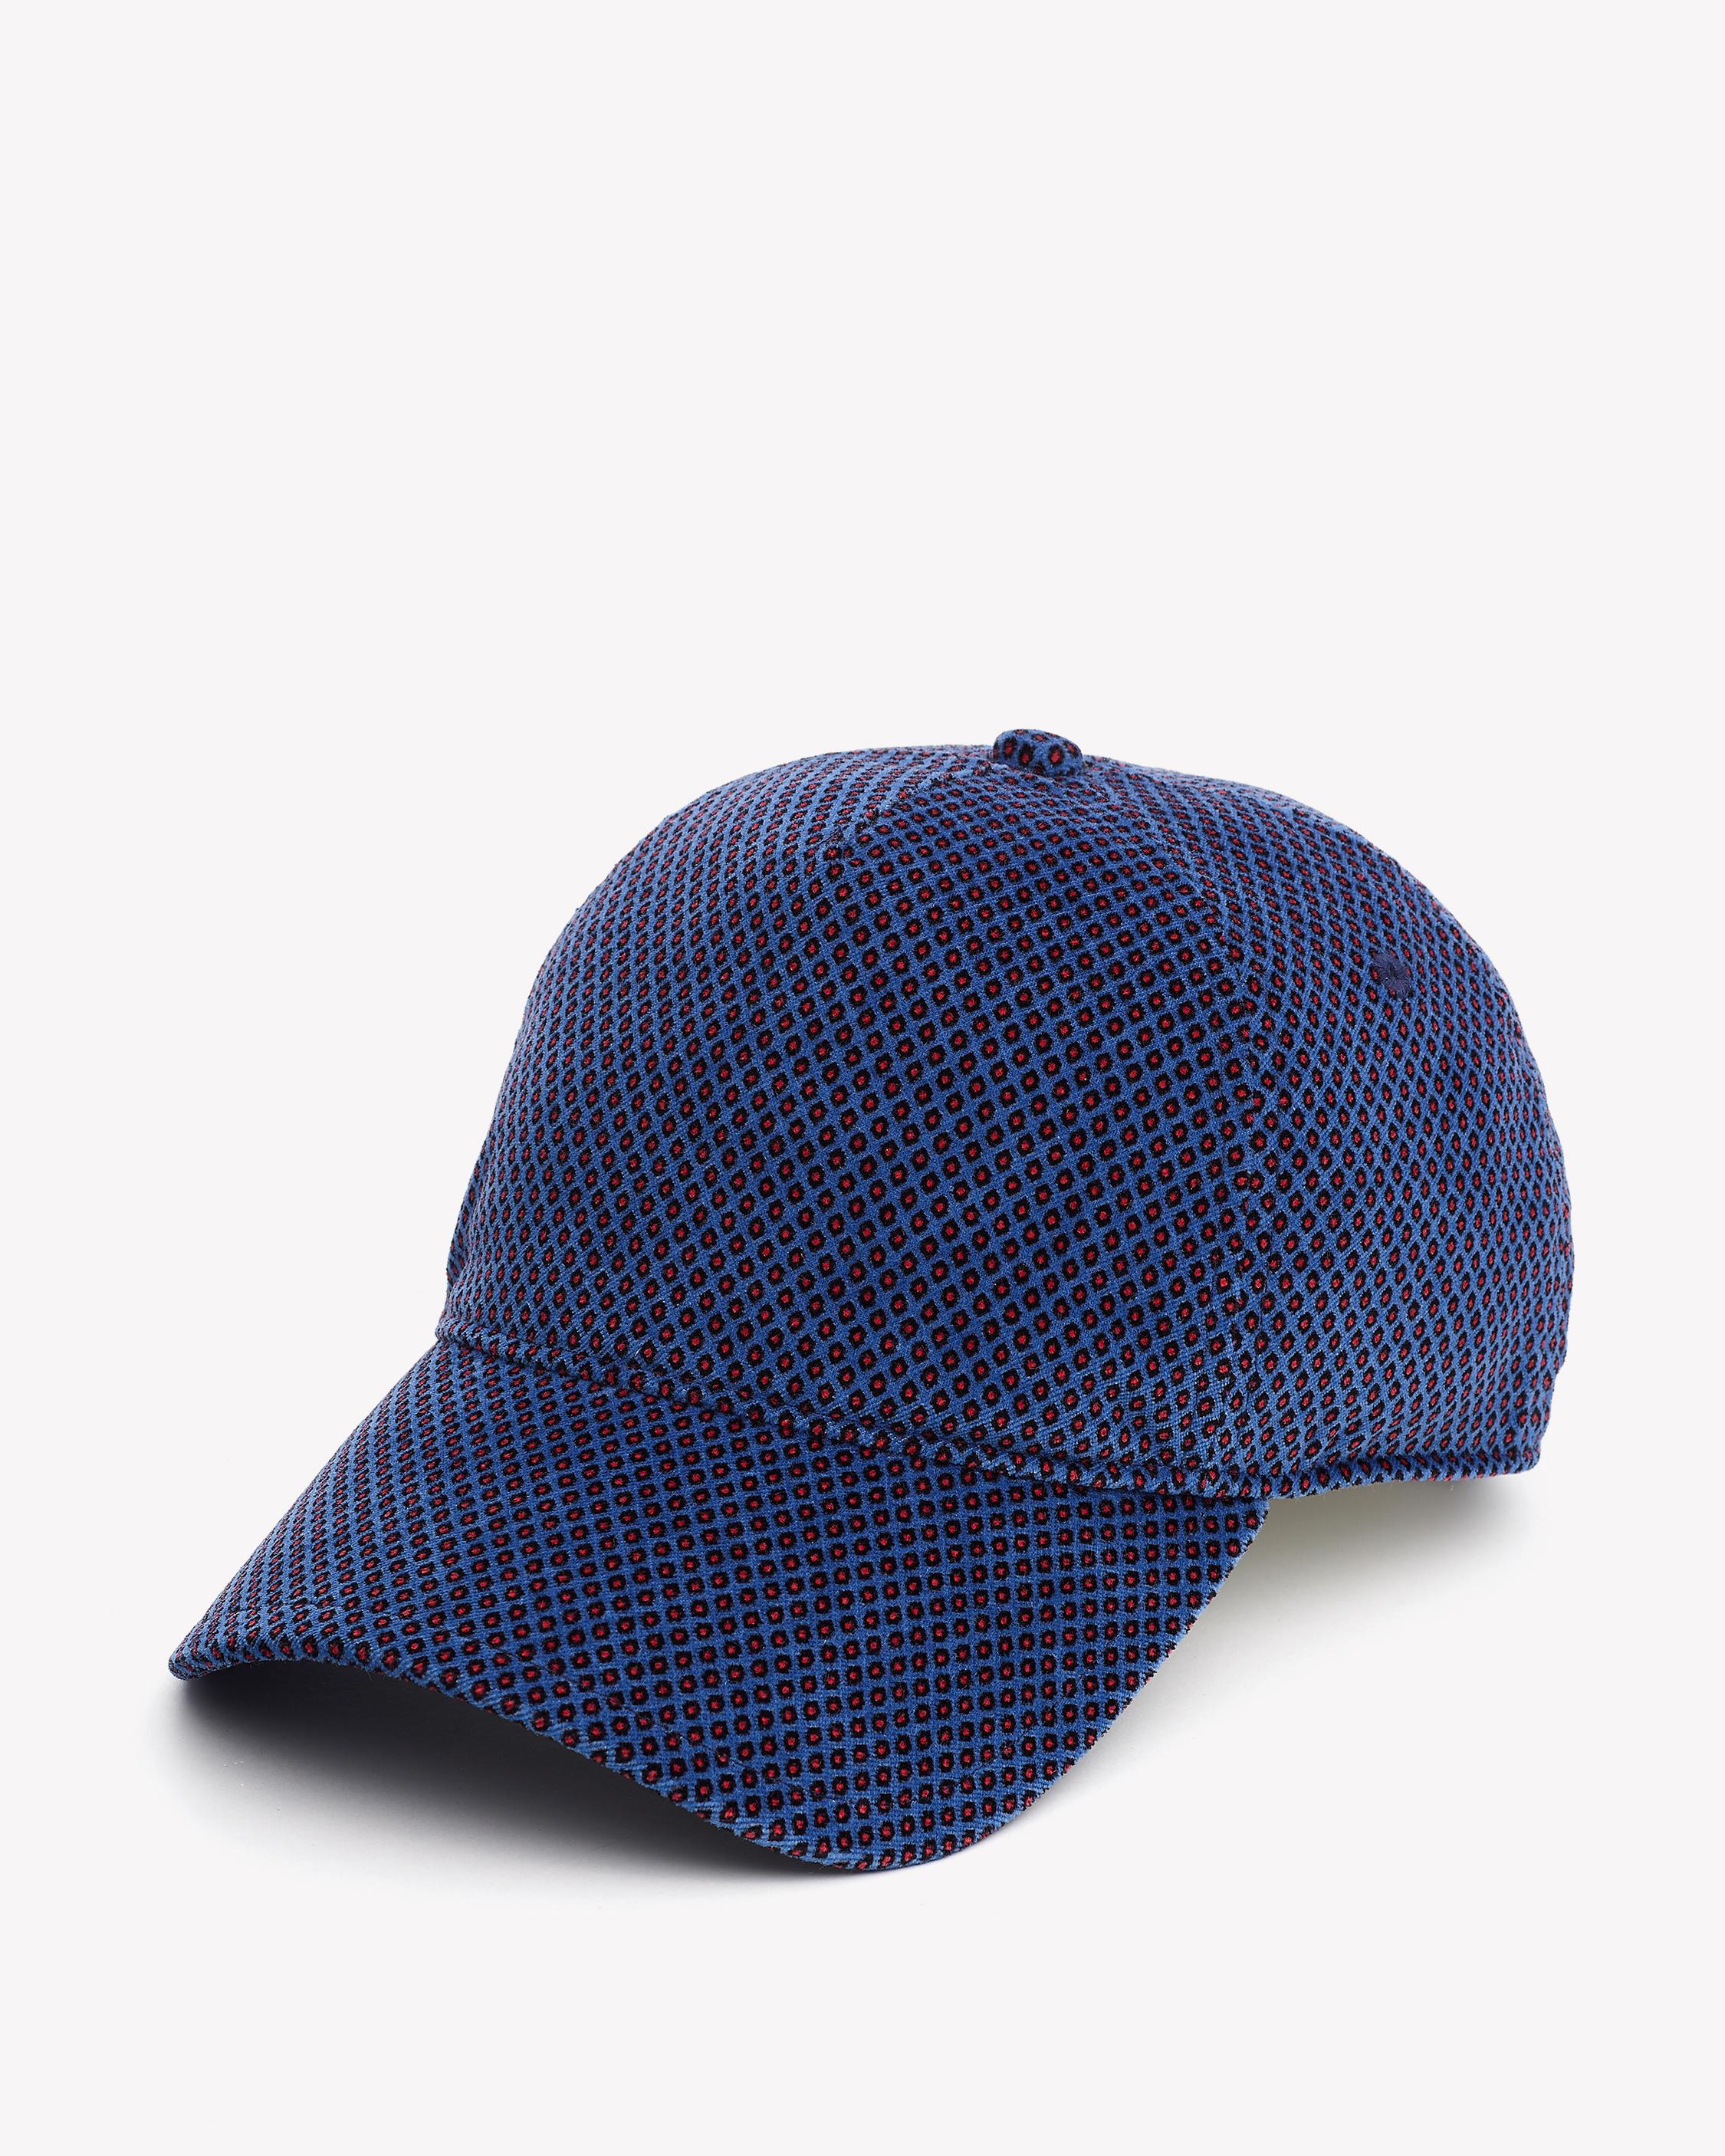 rag and bone marilyn baseball cap